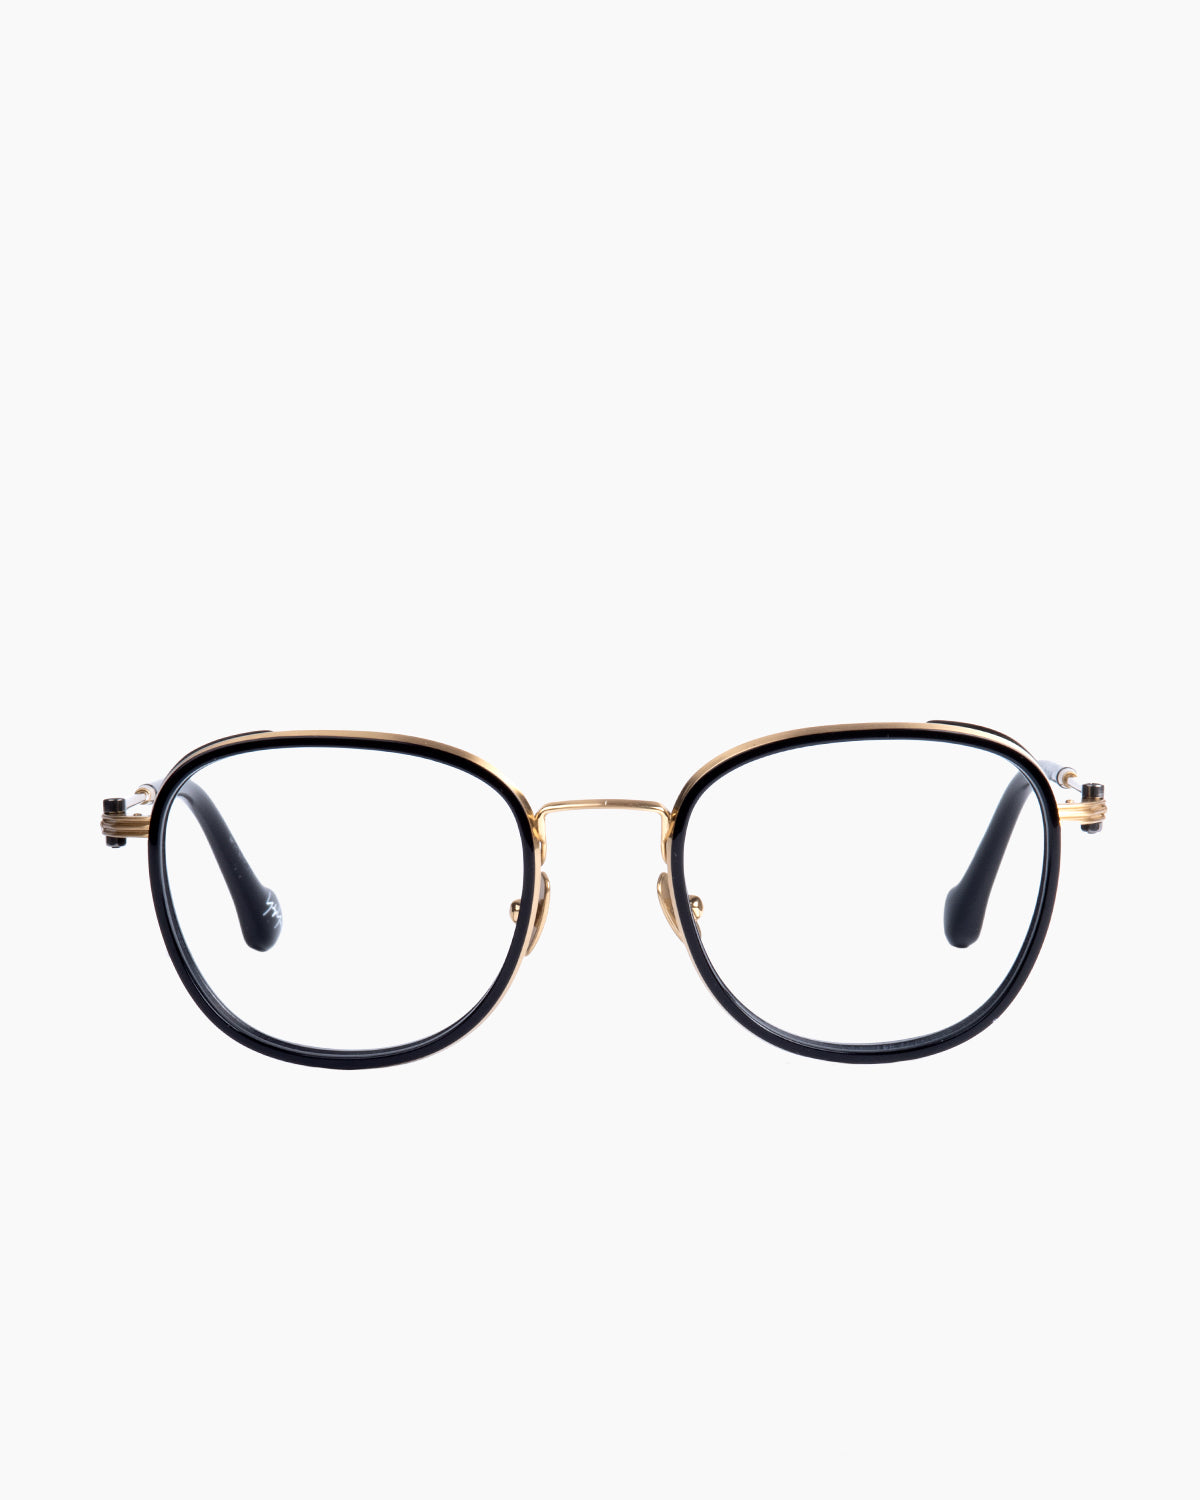 Yohji Yamamoto - Look005 - 001 | glasses bar:  Marie-Sophie Dion